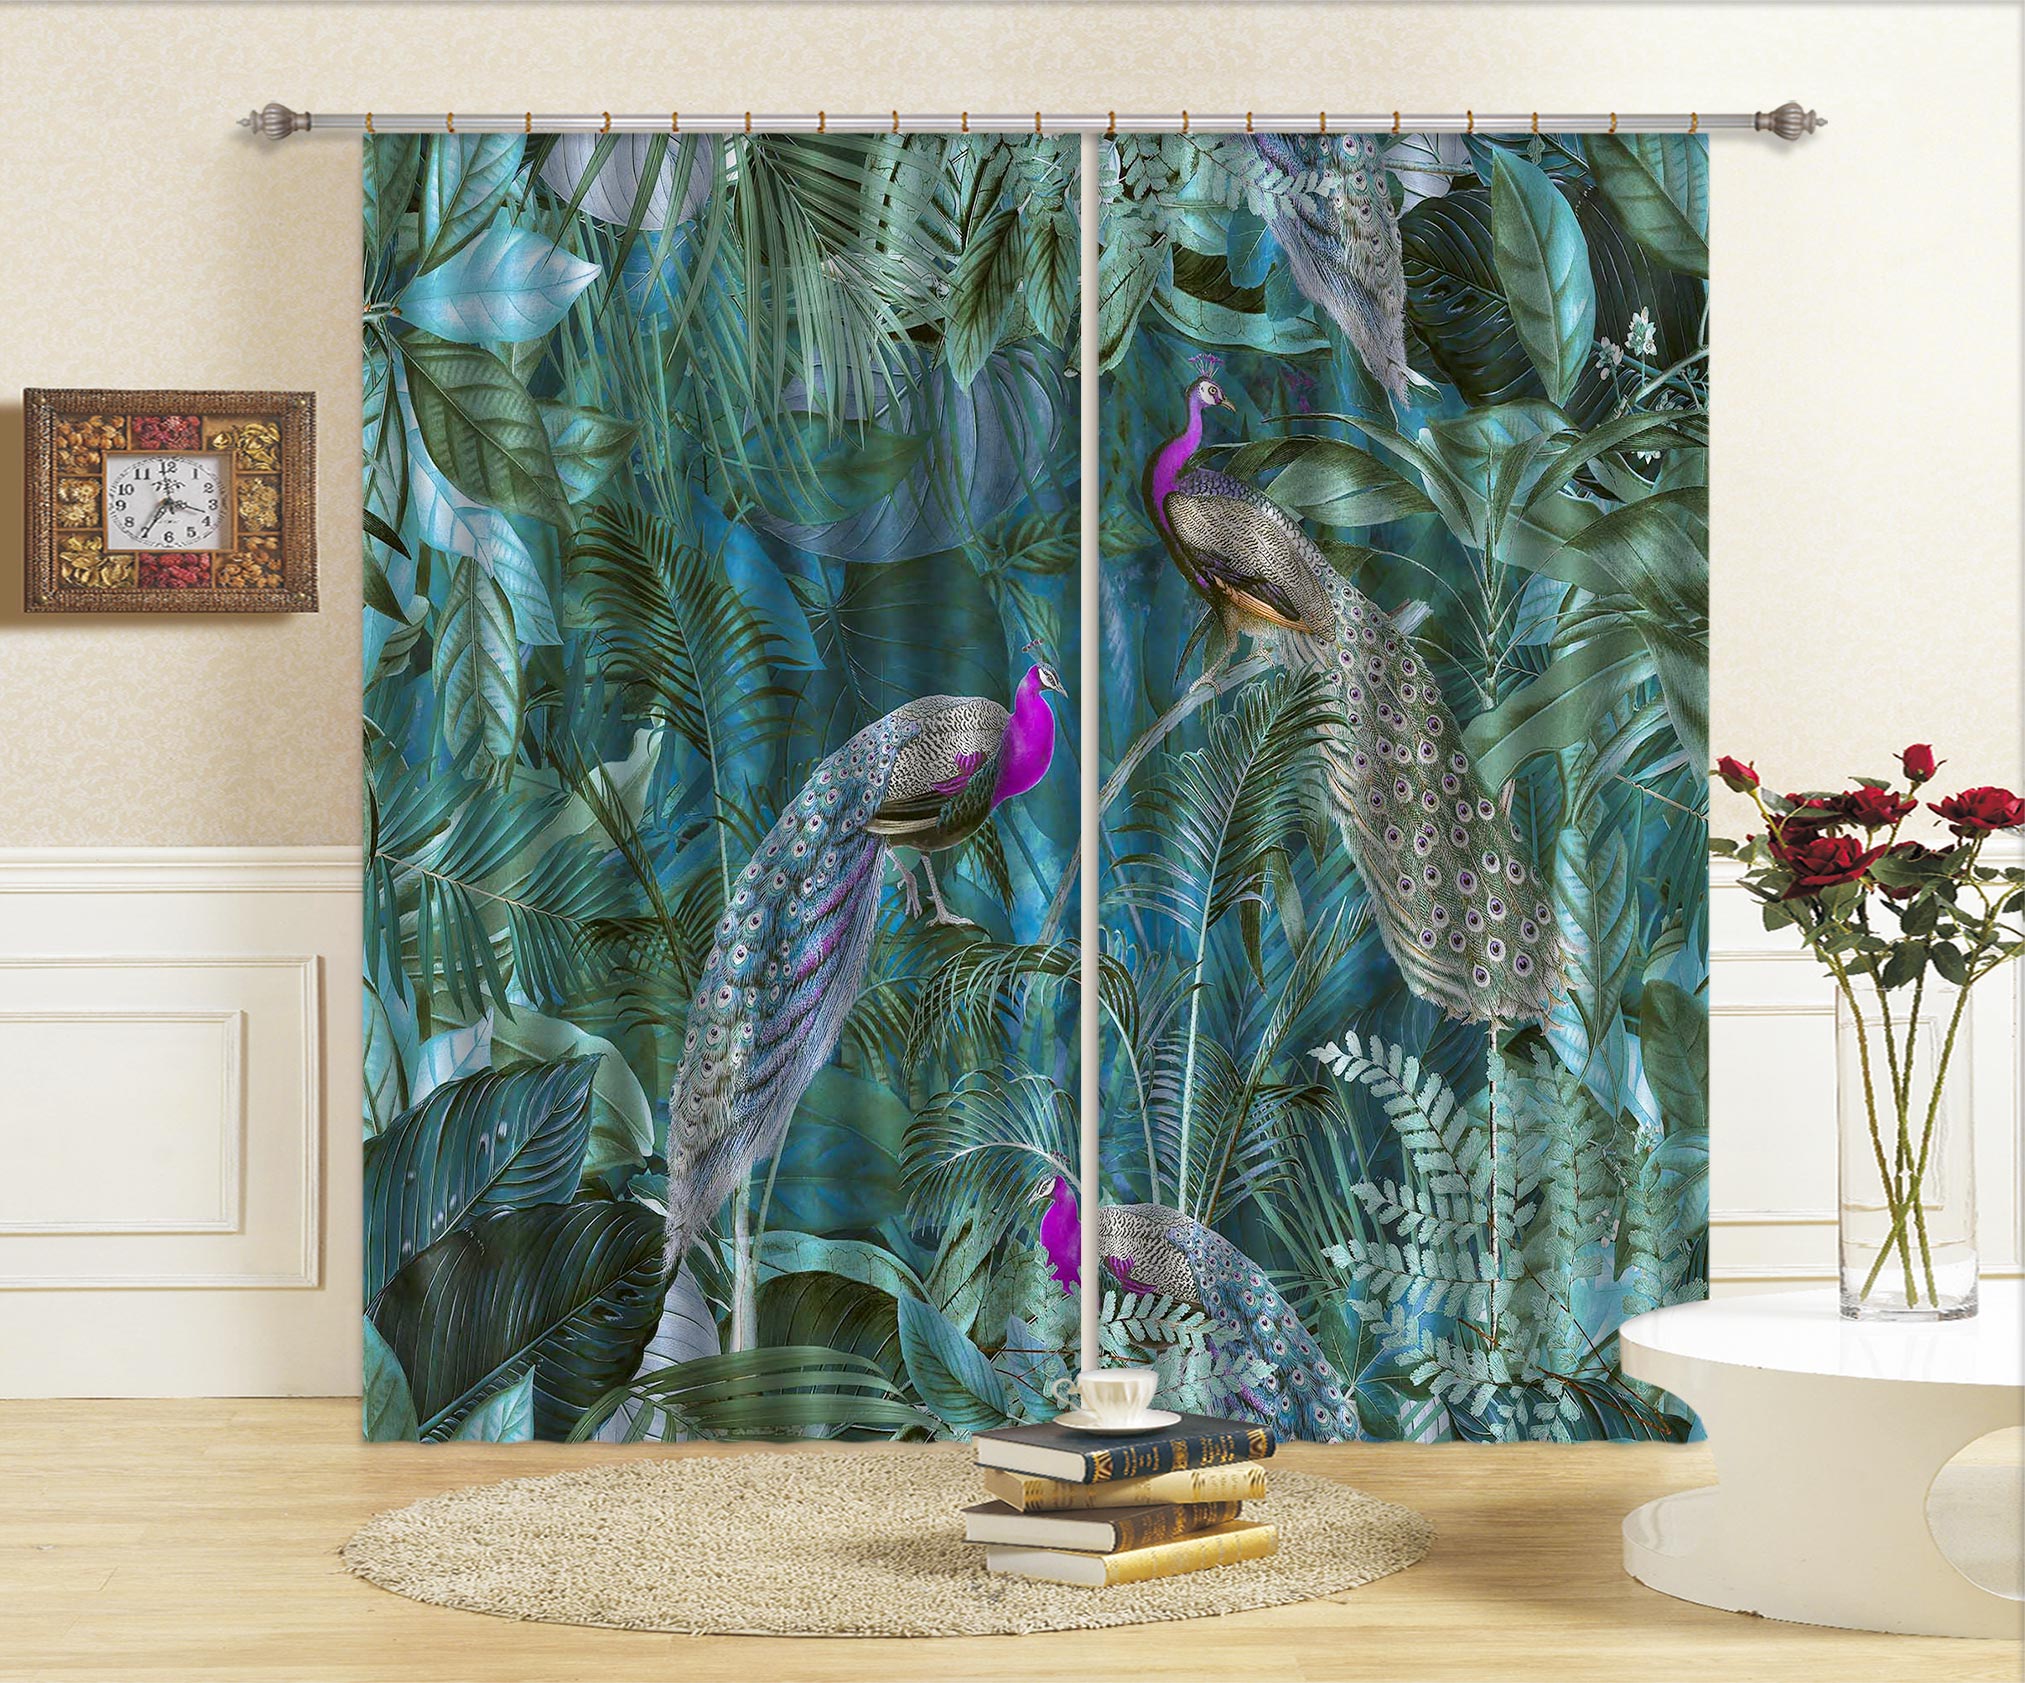 3D Peacock Paradise 011 Andrea haase Curtain Curtains Drapes